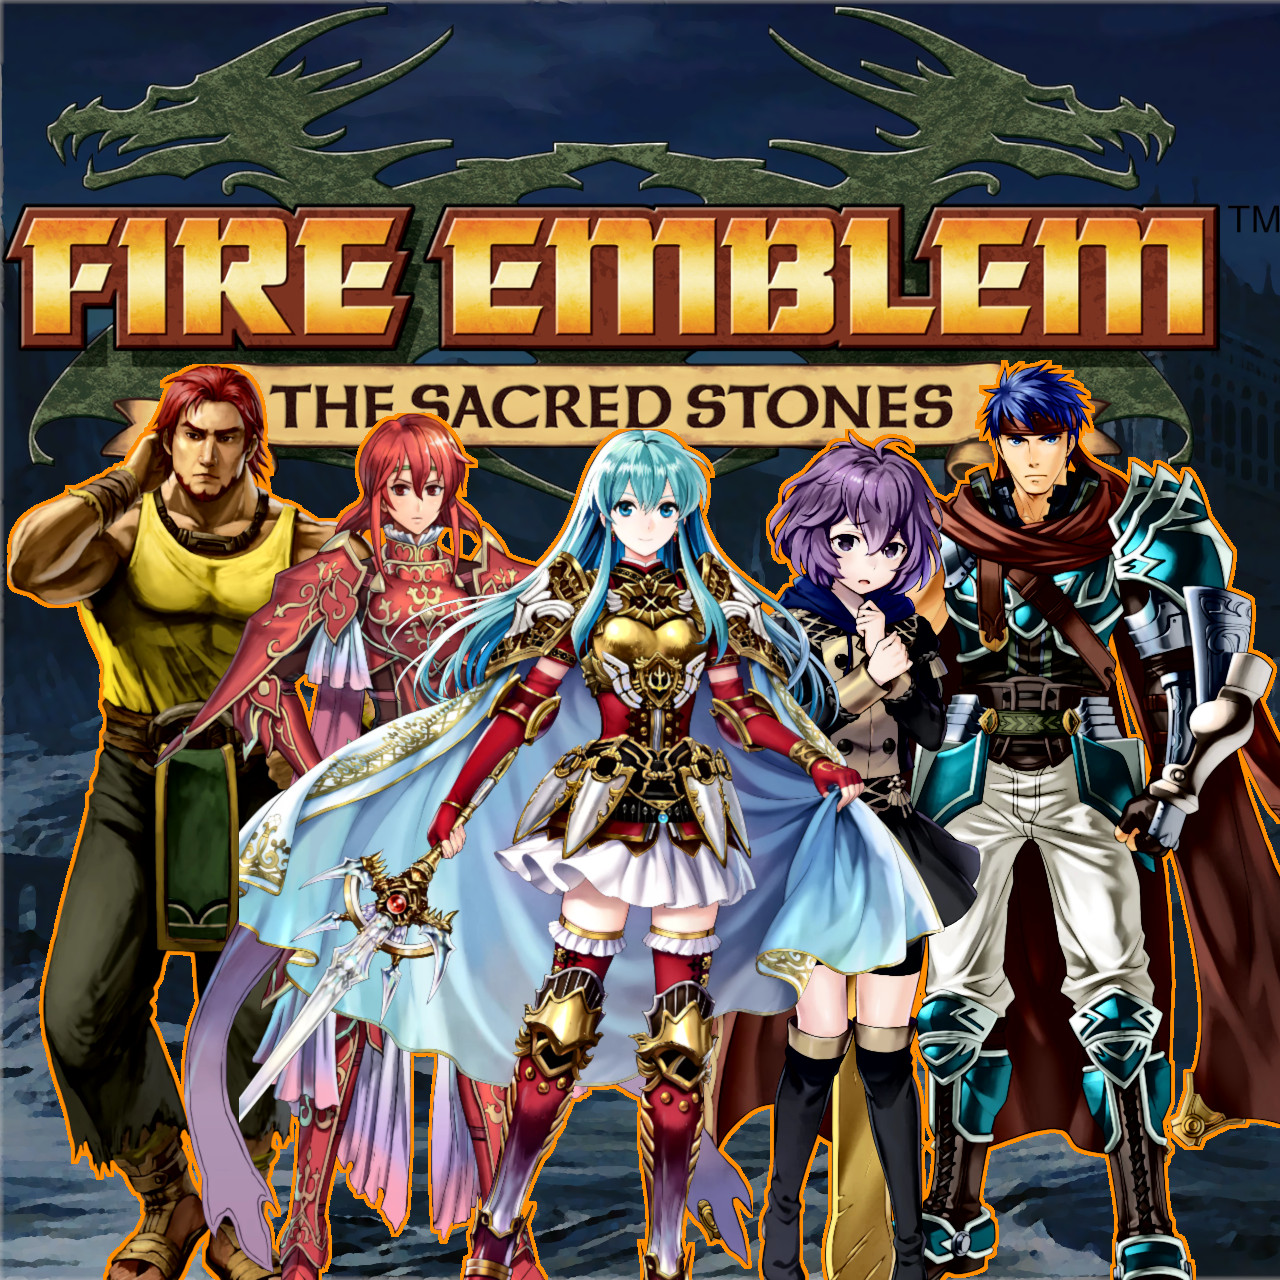 Fire Emblem: The Sacred Stones RELOADED (also Fire Emblem HEROES